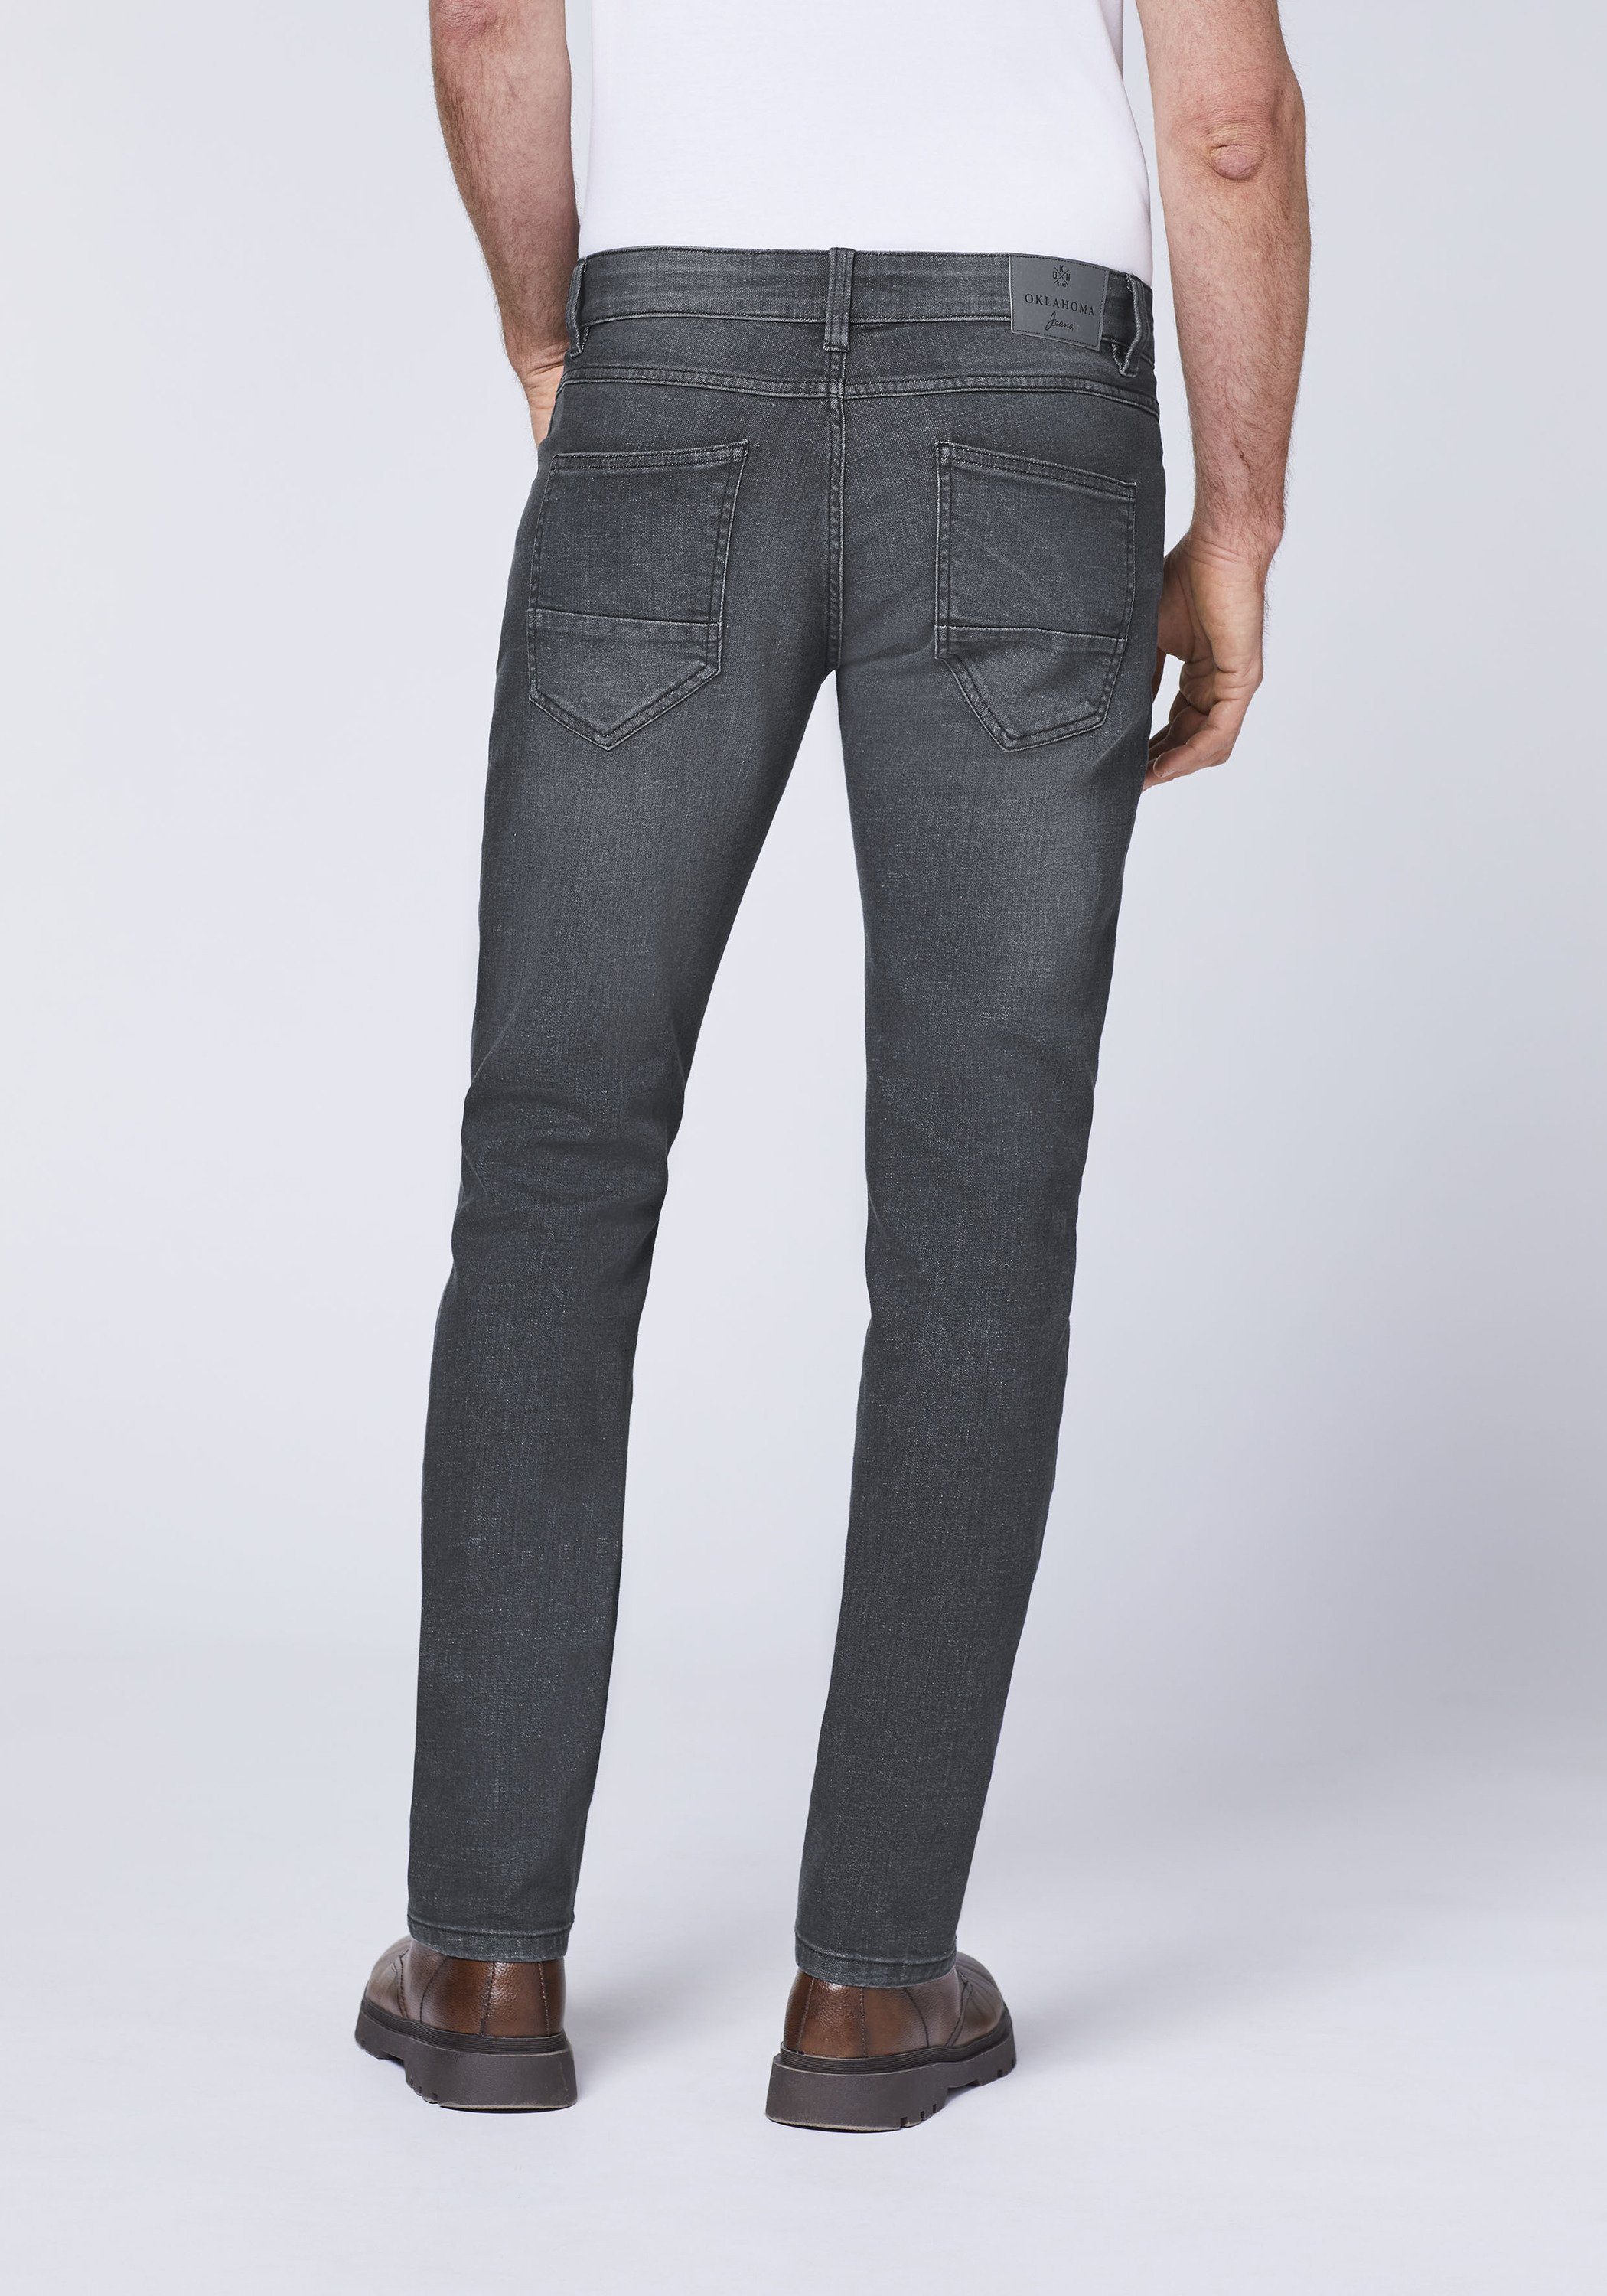 dezenter Slim-fit-Jeans Waschung mit Jeans Oklahoma